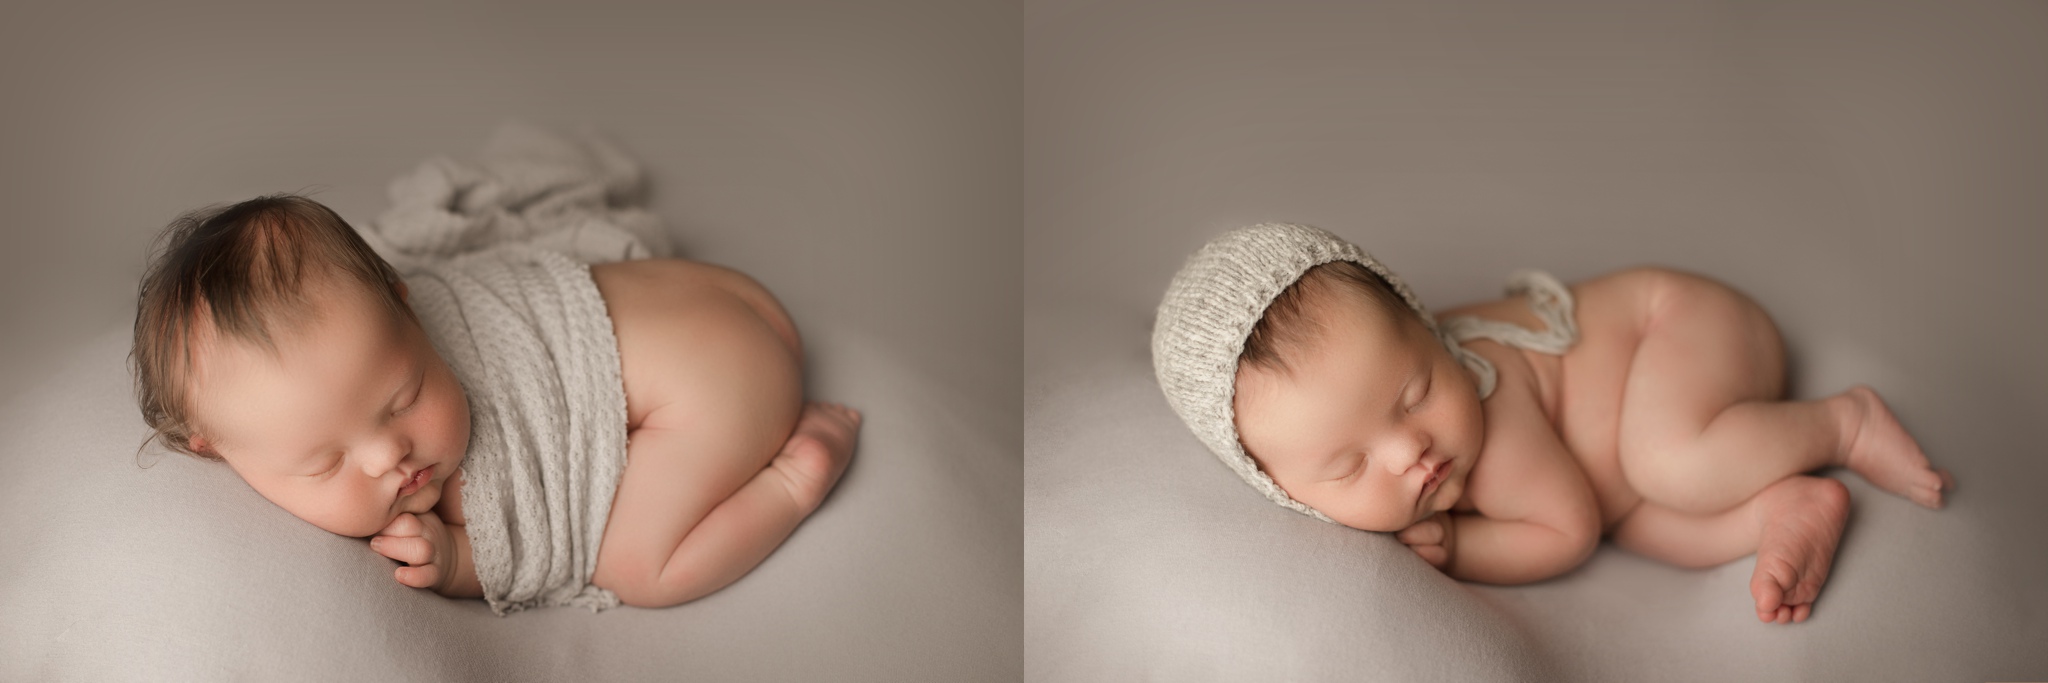 Tisdale Newborn Photos-04